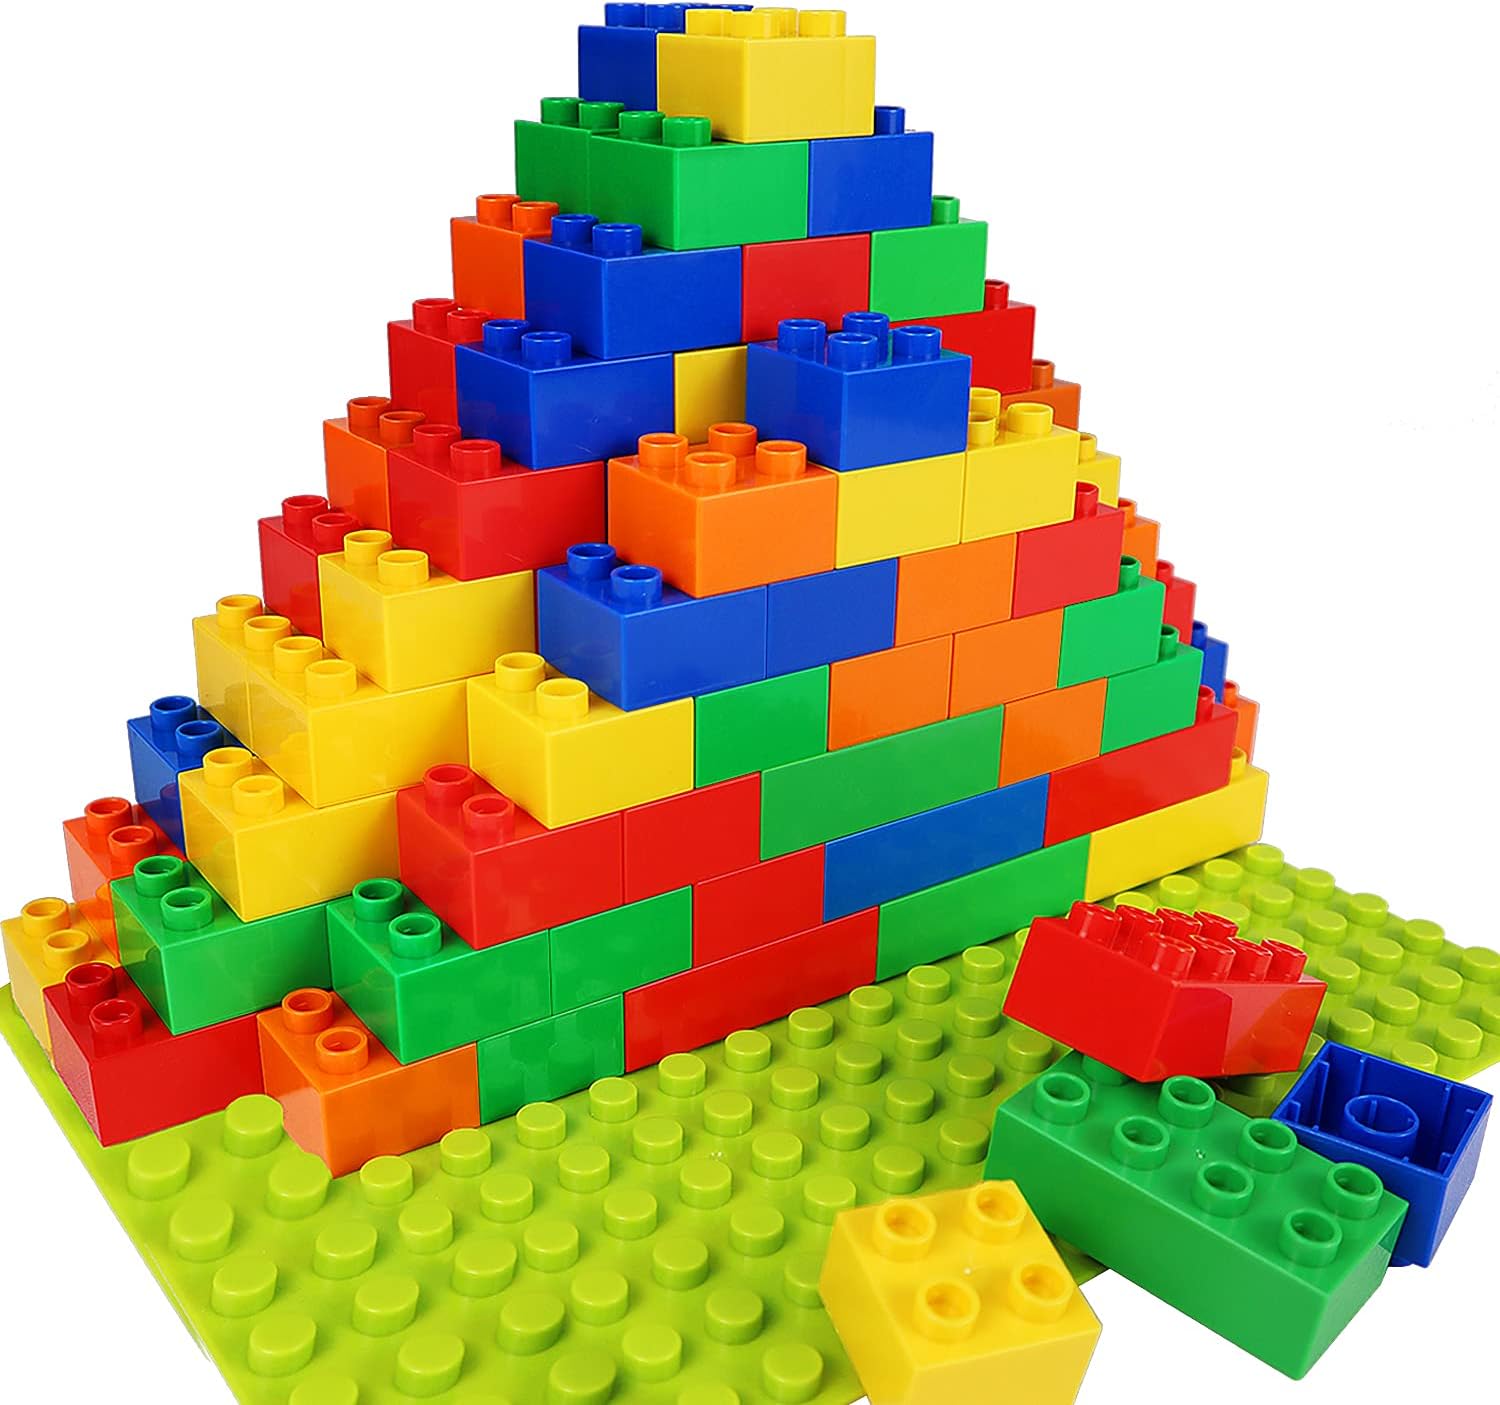 Kids Educational Construction DIY Toy Classic Base Plate Plastic Building Blocks 